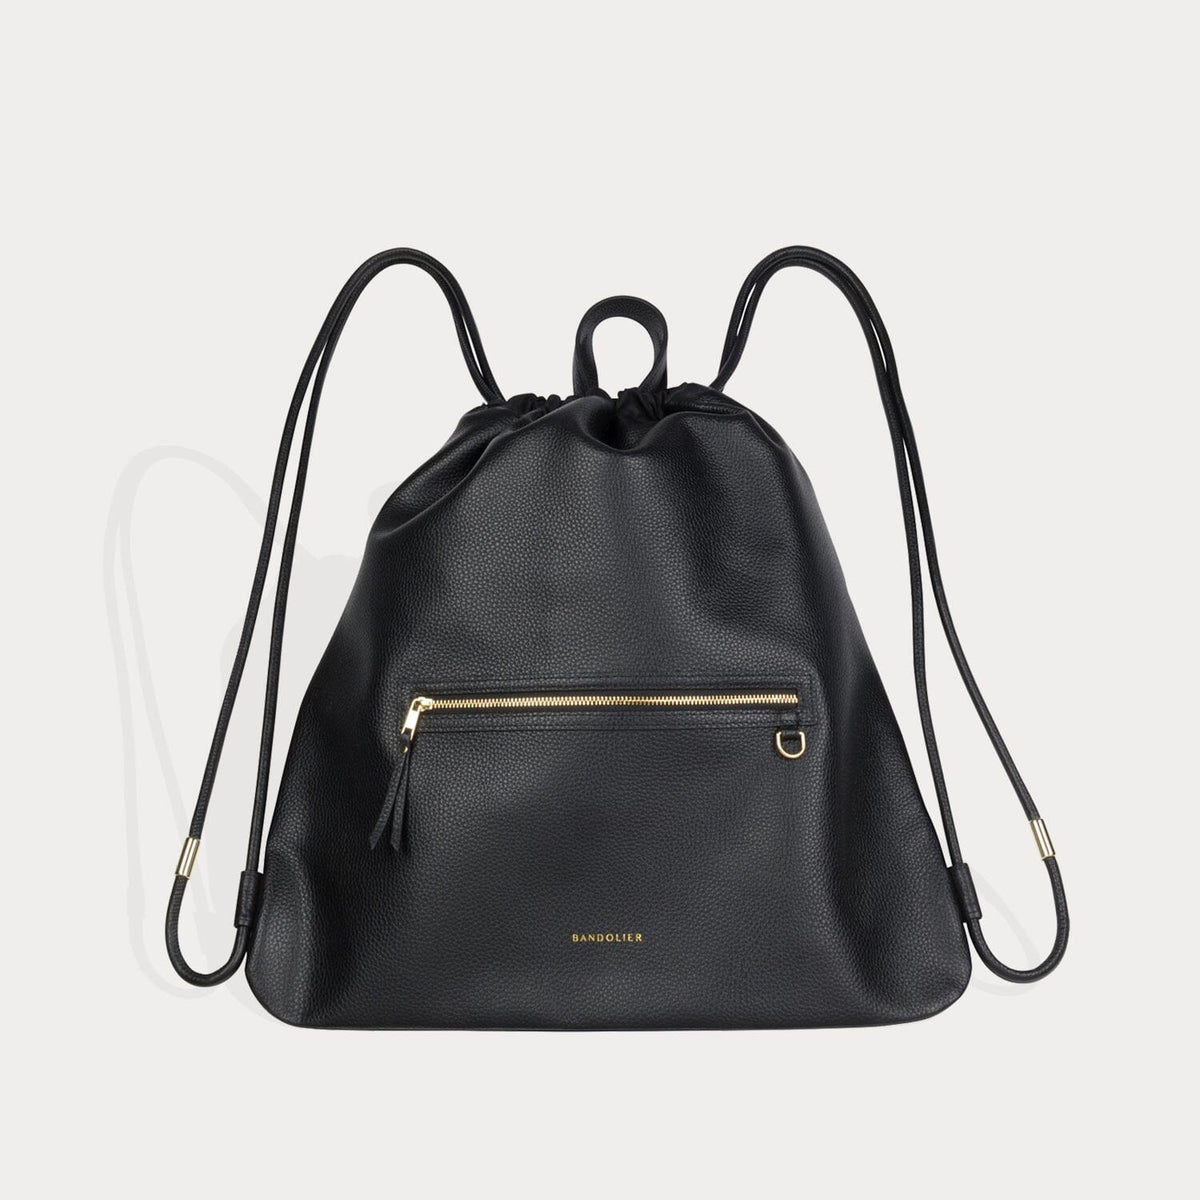 Bags women 2021 new fashion Korean women's bags trendy backpack